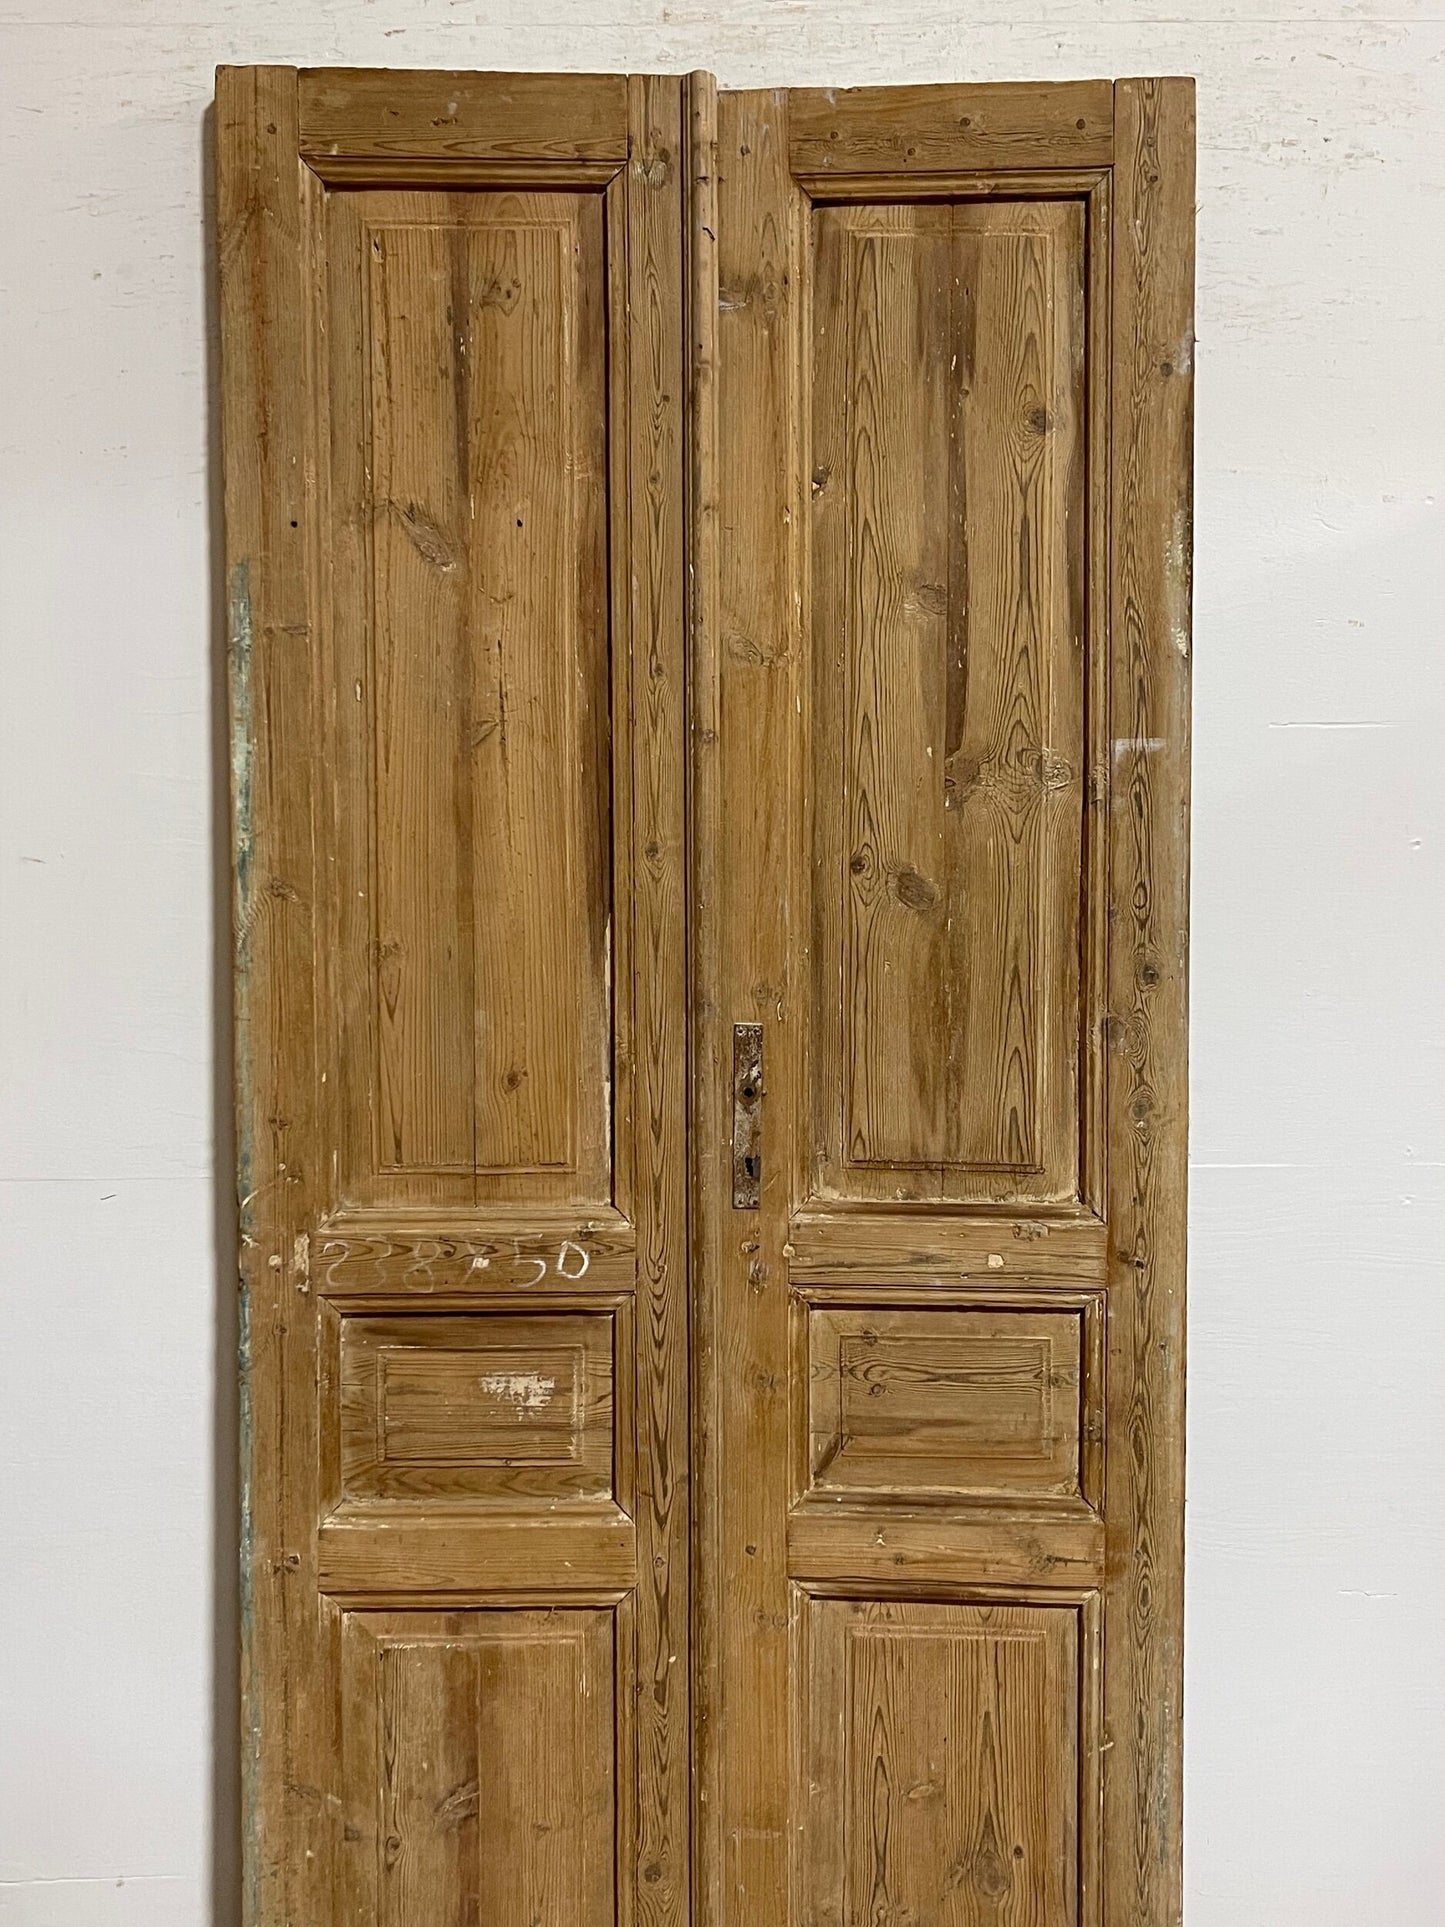 Antique French panel doors (93x39.25) I160